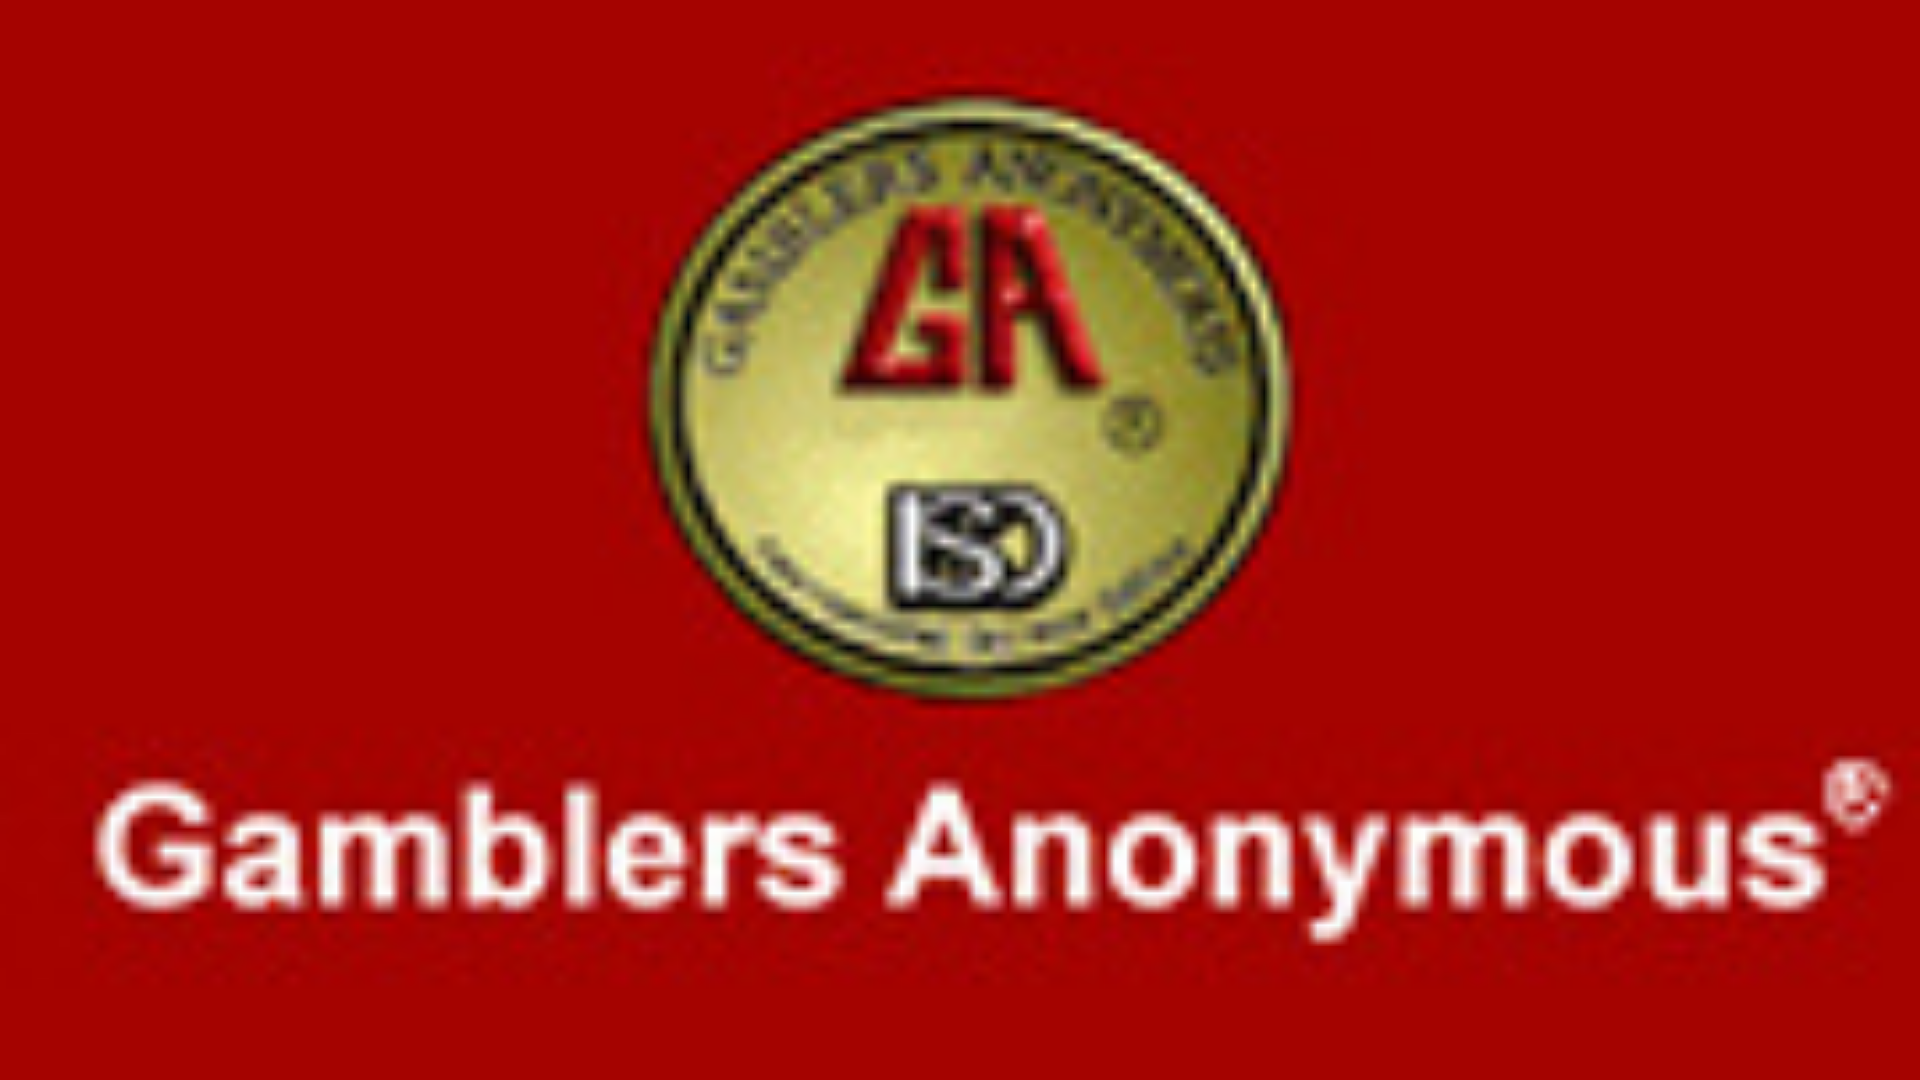 Gambler’s Anonymous